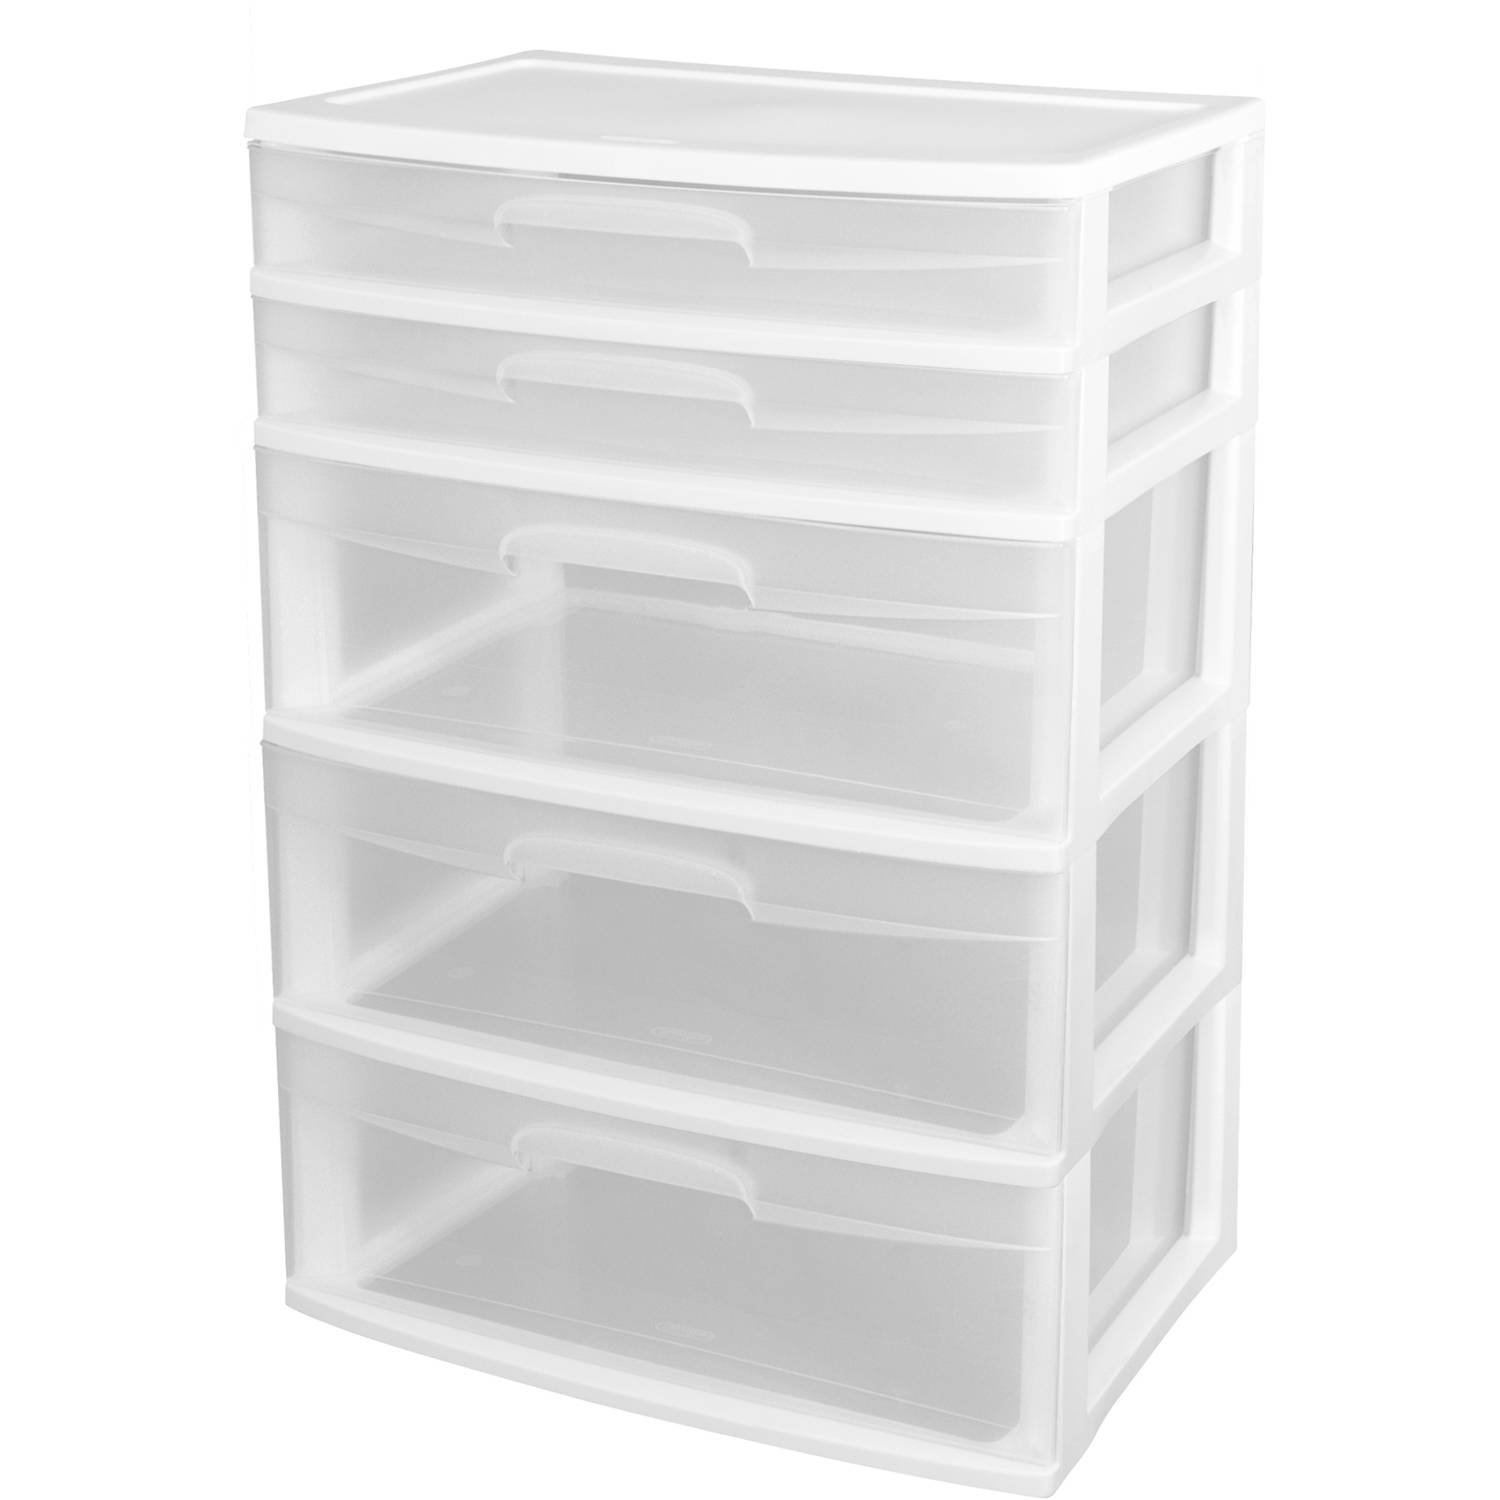 Plastic storage drawers storage made easier & convenient